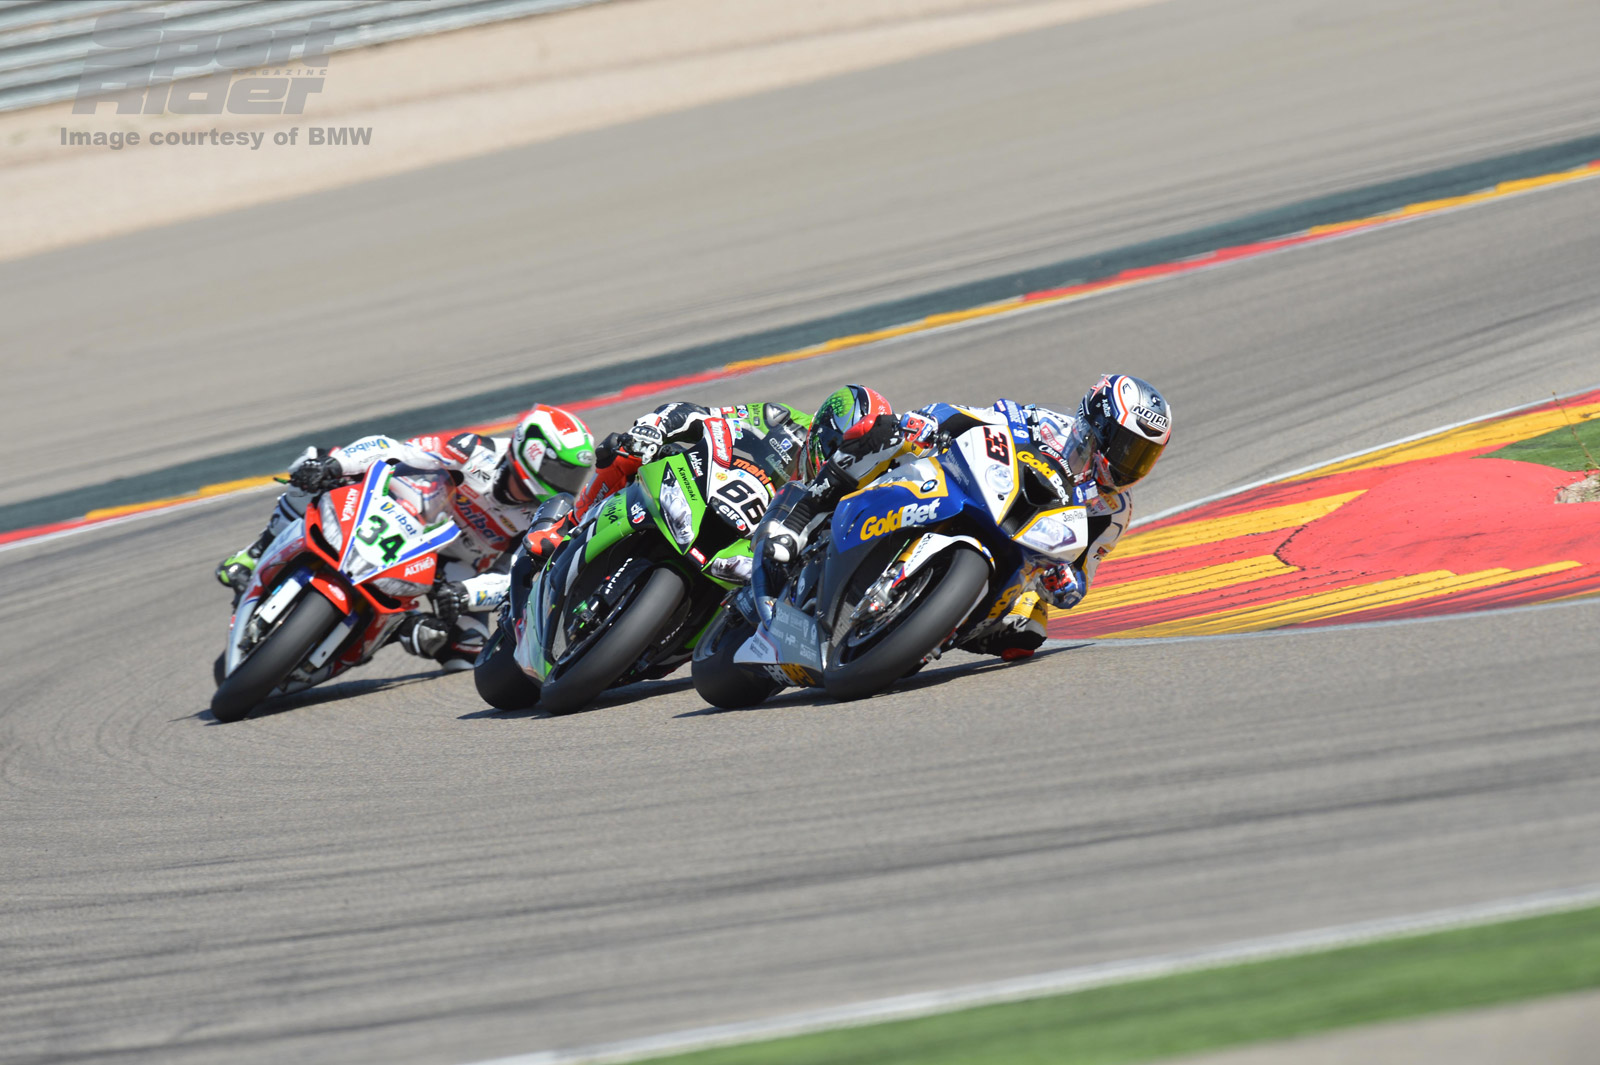 Aragon World Superbike Wallpaper Sport Rider